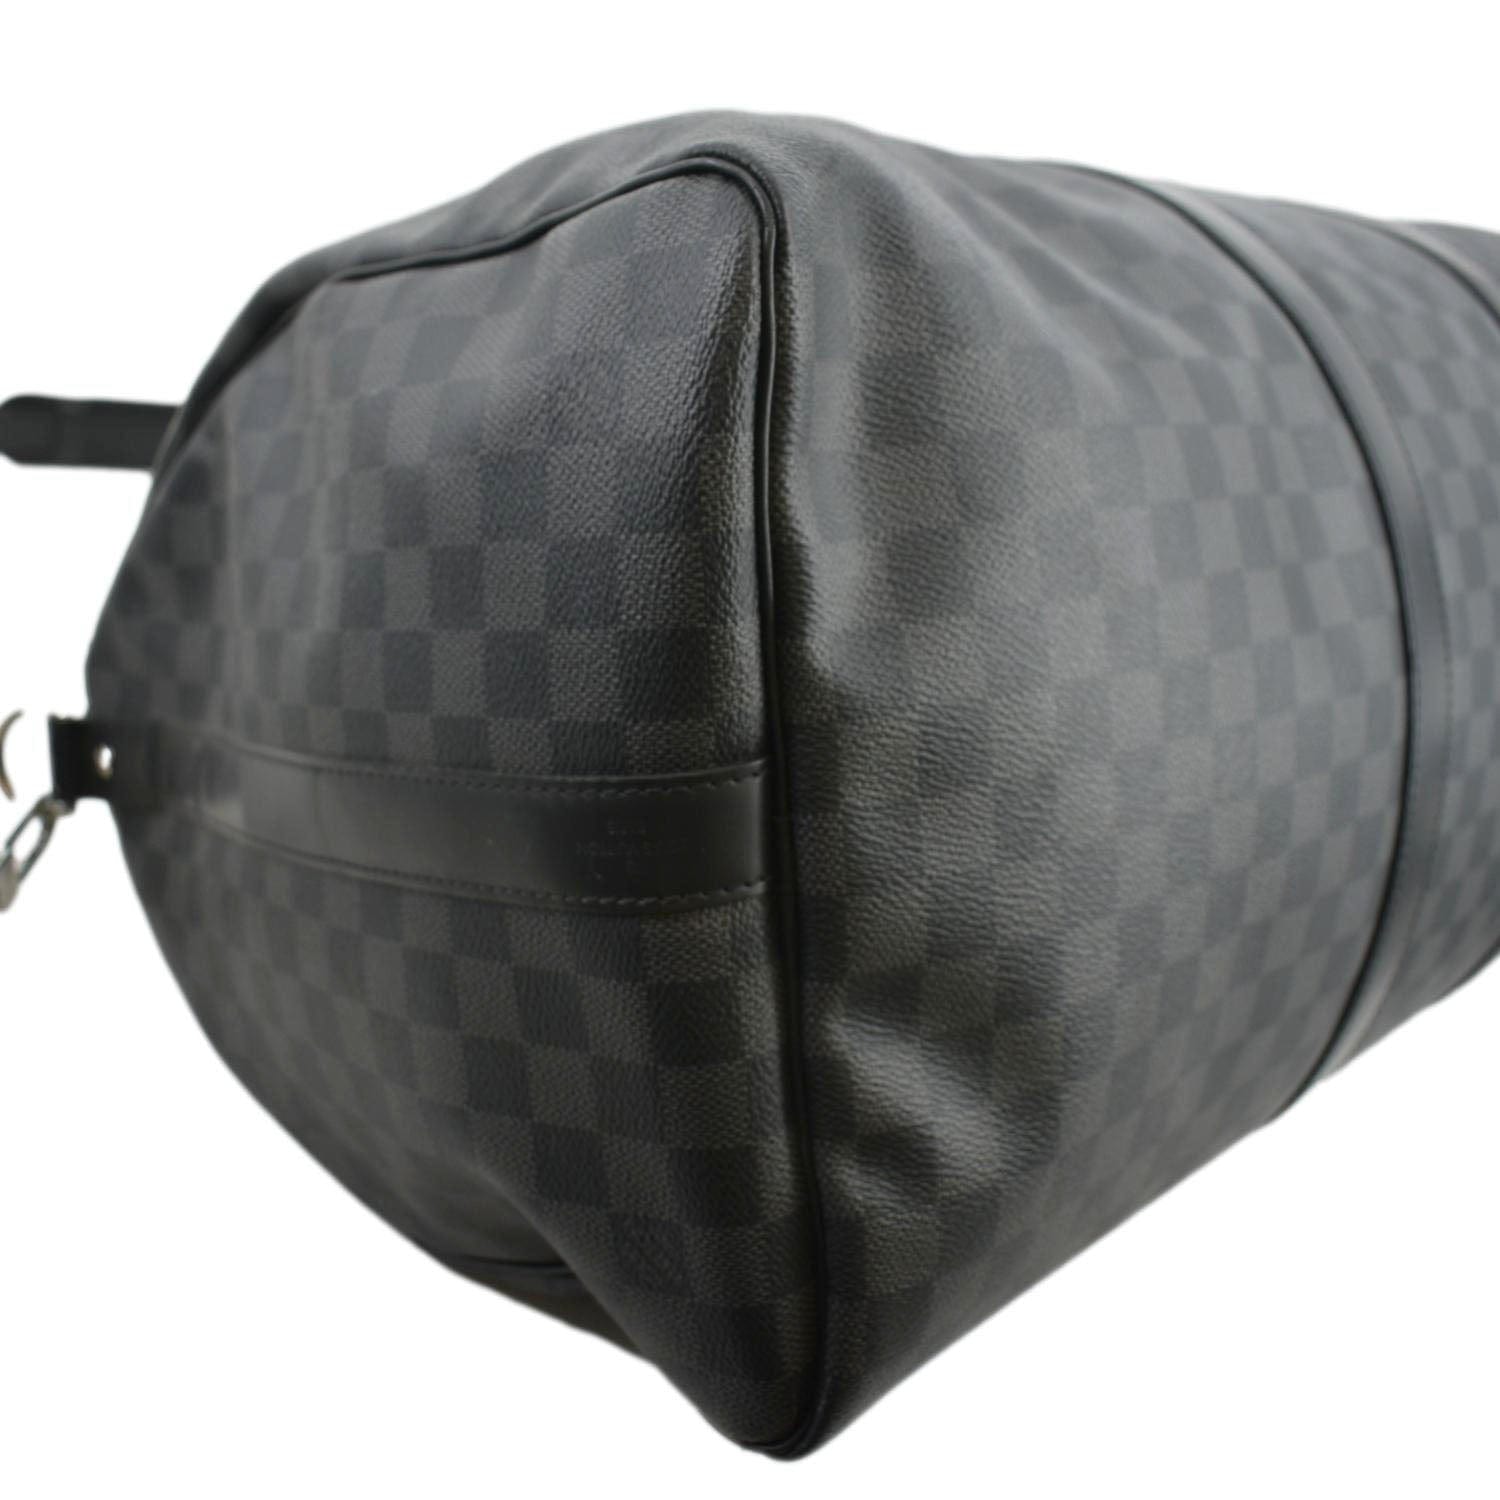 Louis Vuitton - Keepall 55 - Travel bag - Catawiki